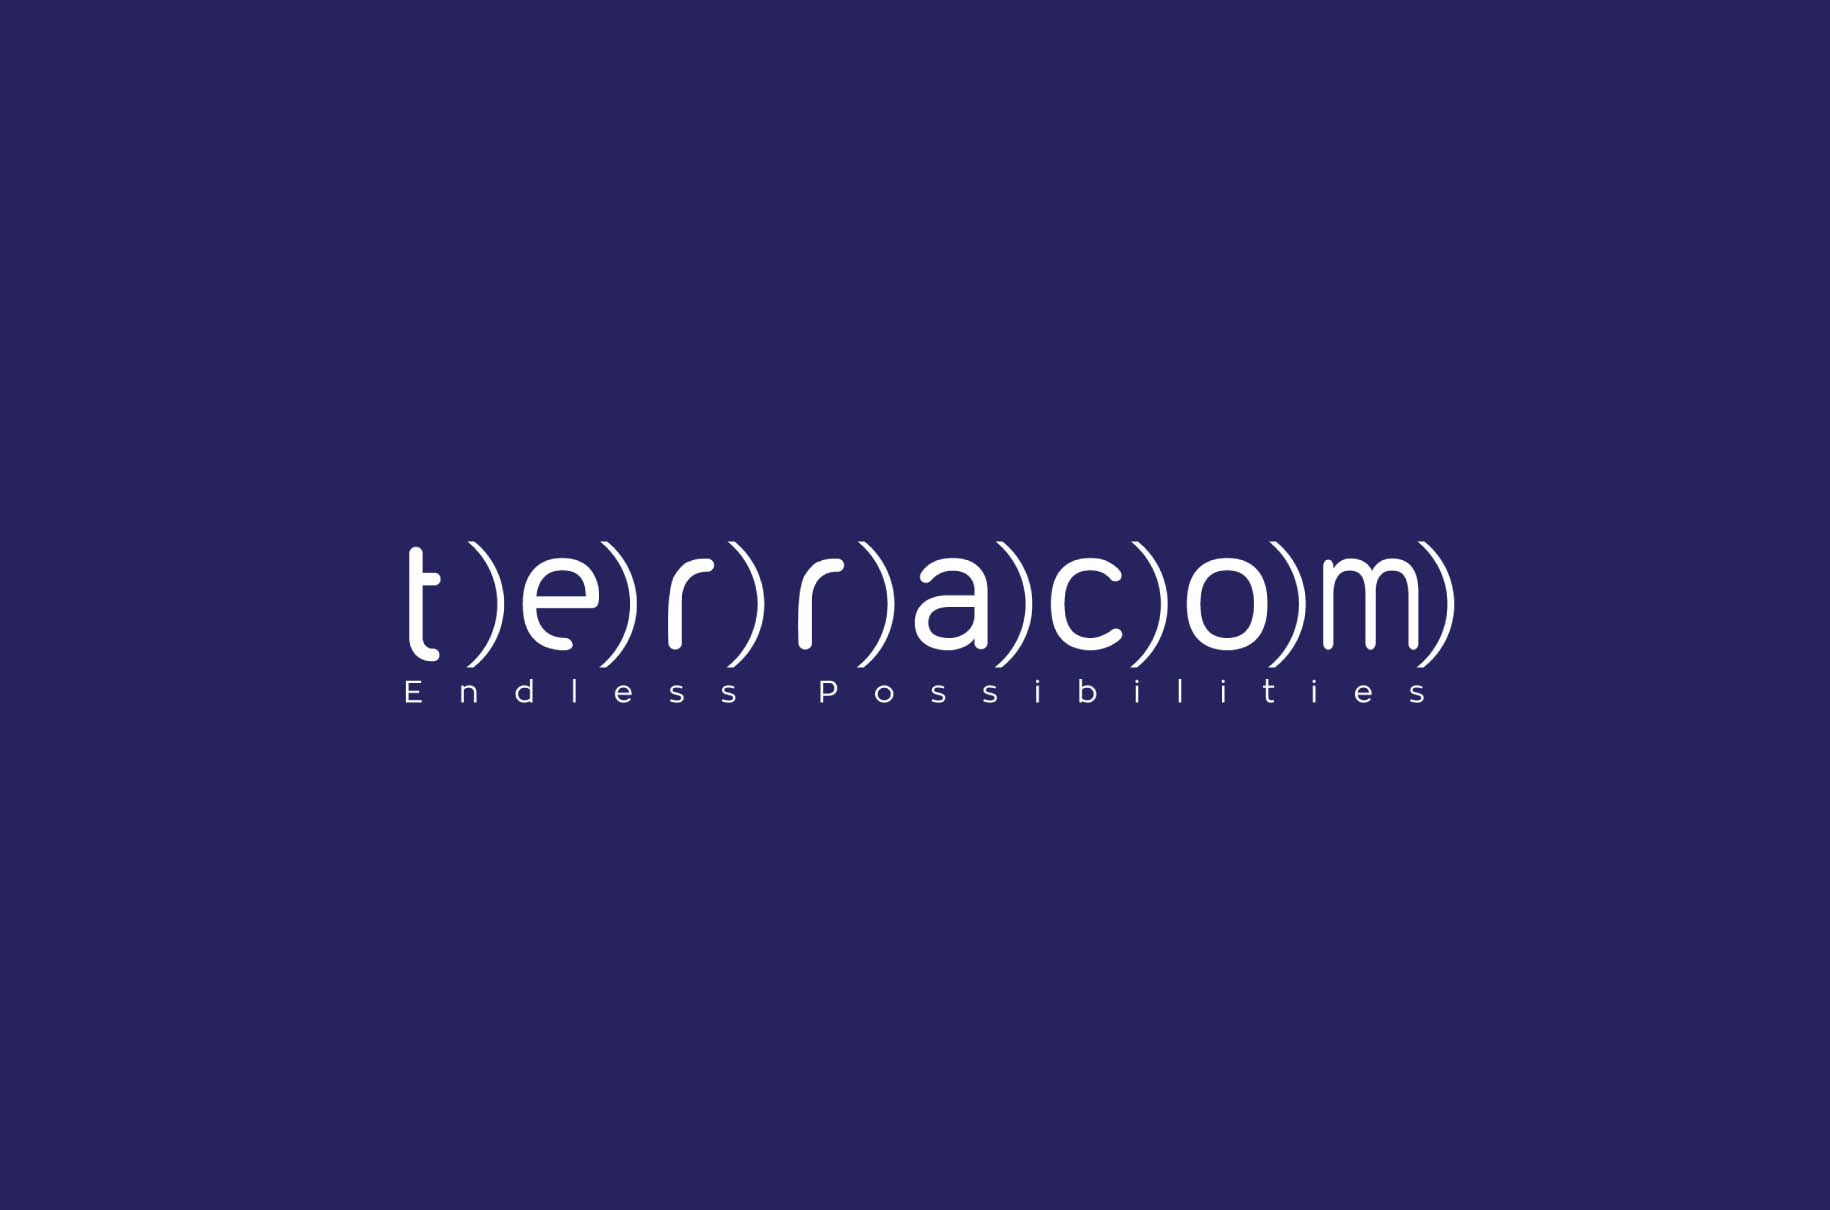 Terracom: 4ημερη εργασία Ιούνιο-Ιούλιο